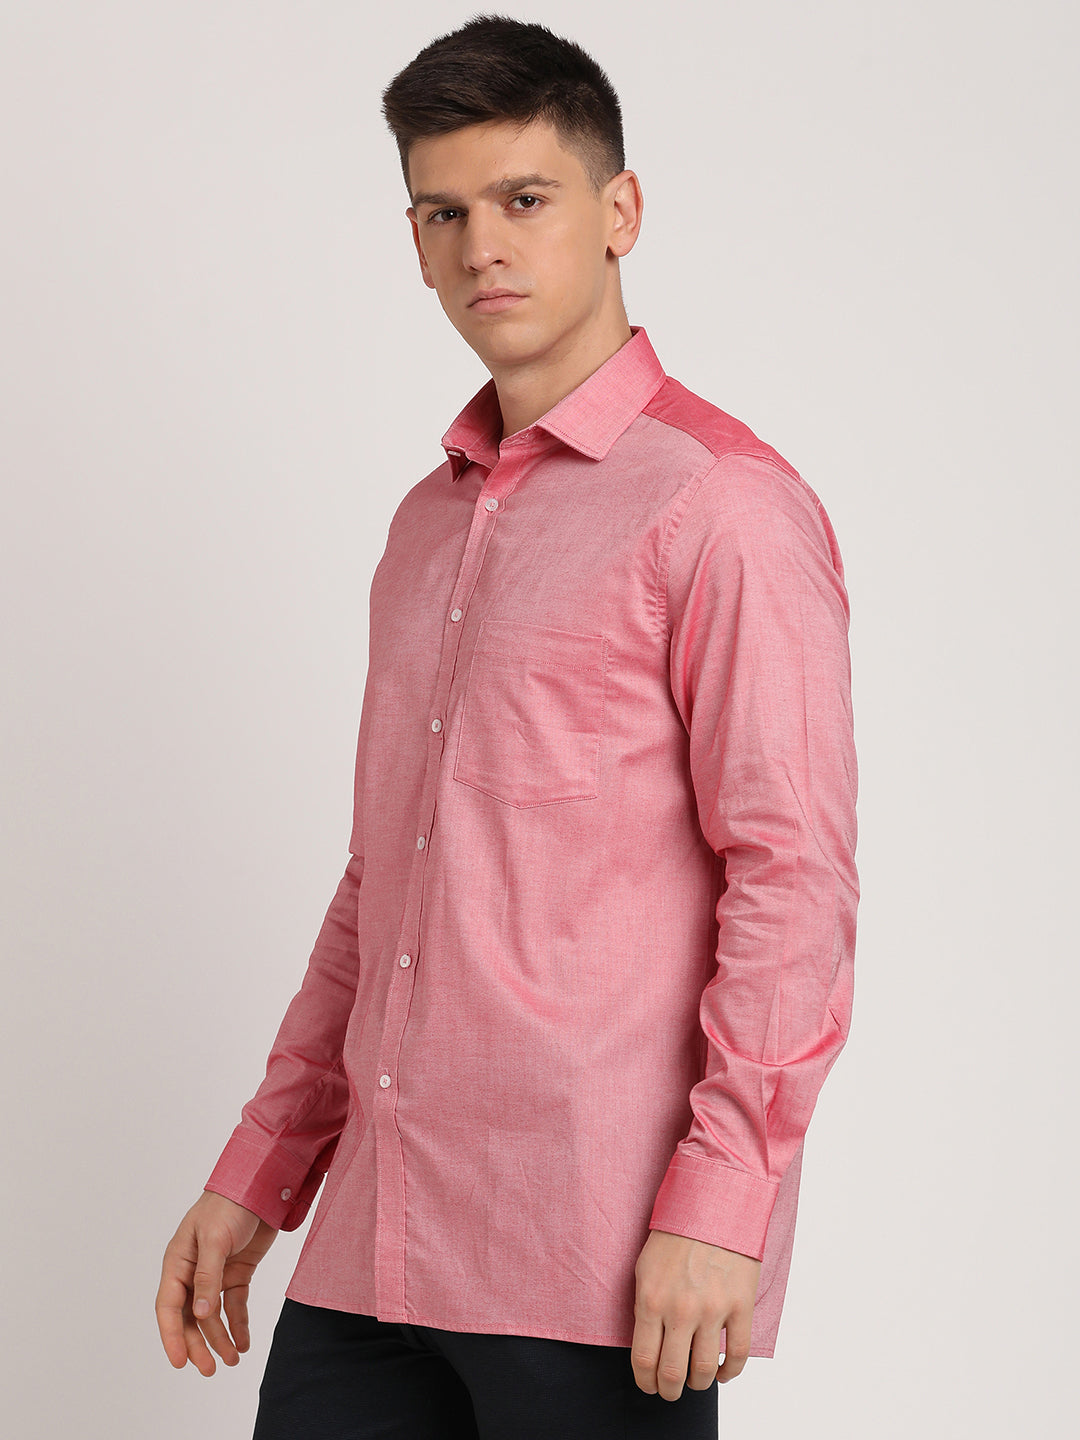 100% Cotton Coral Plain Regular Fit Full Sleeve Formal Shirt